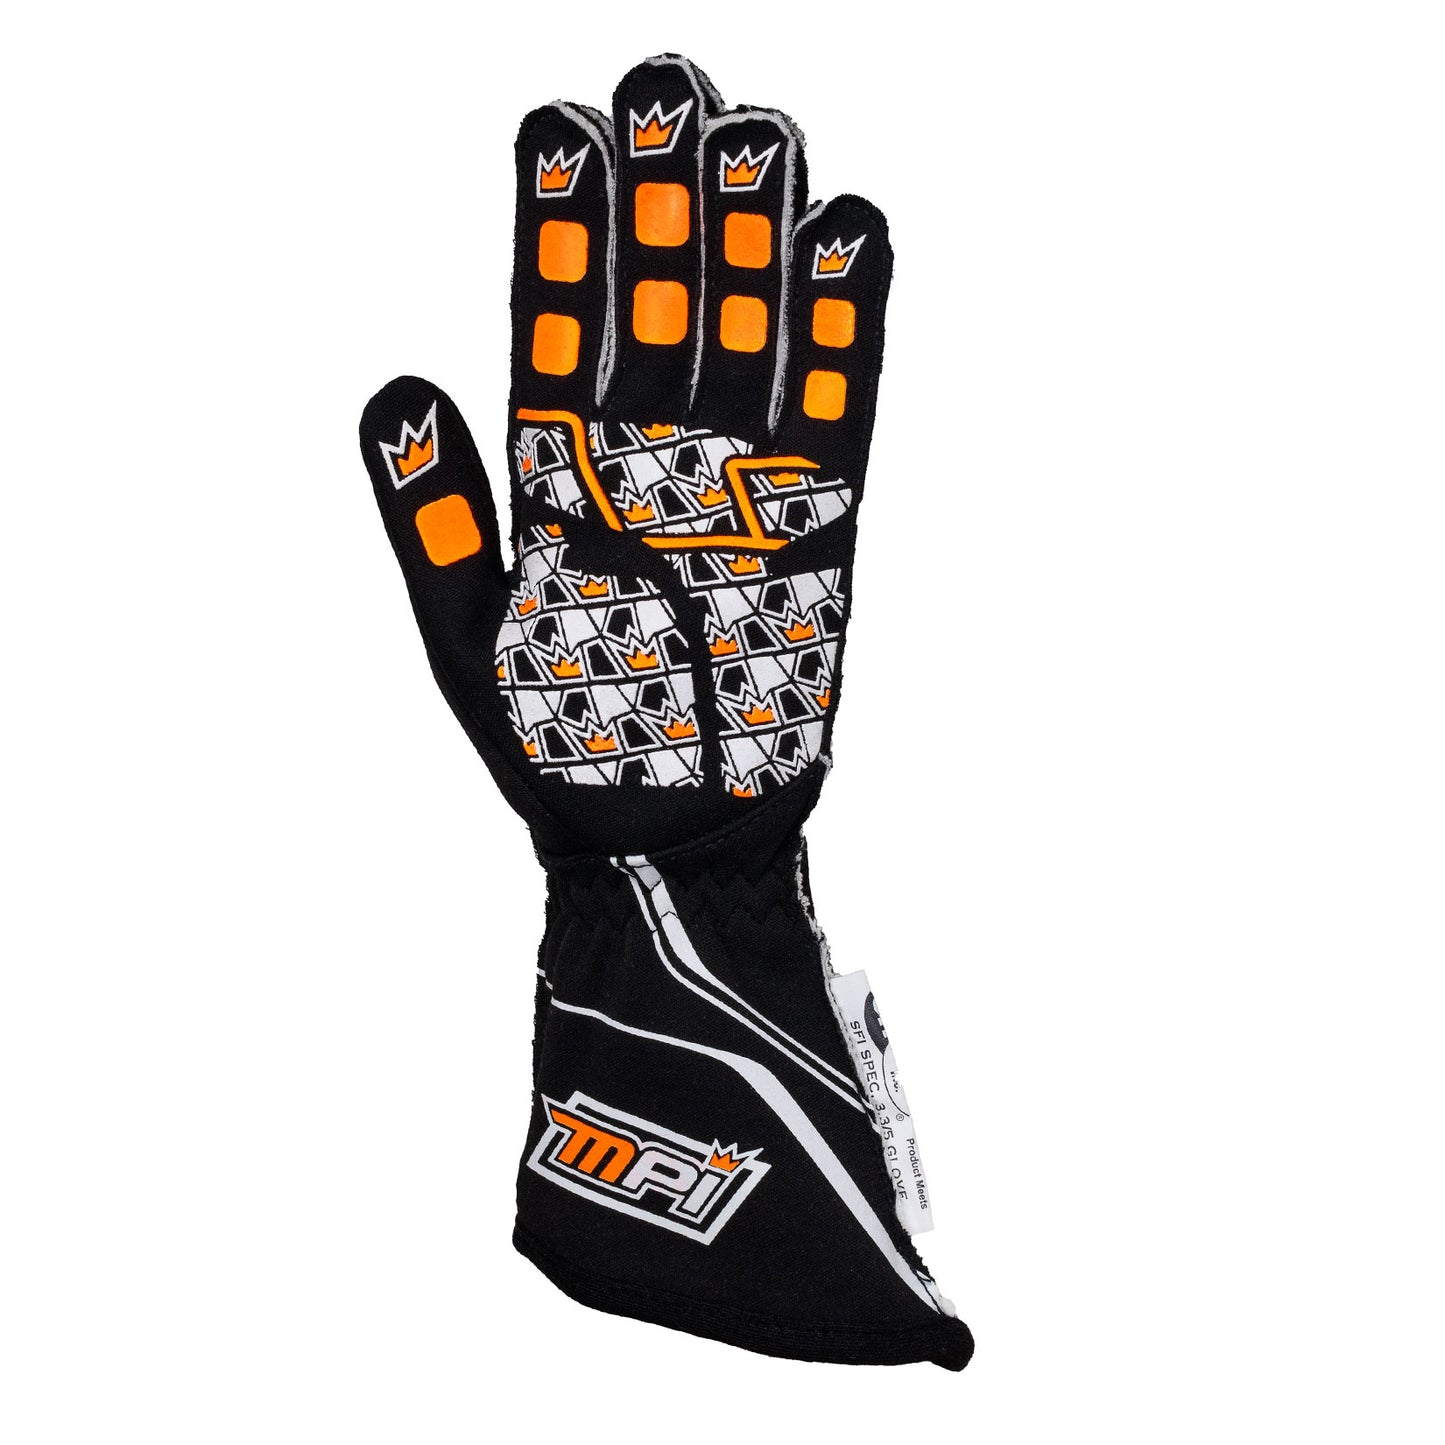 MPI Racing Gloves SFI 3.3/5 Black Small